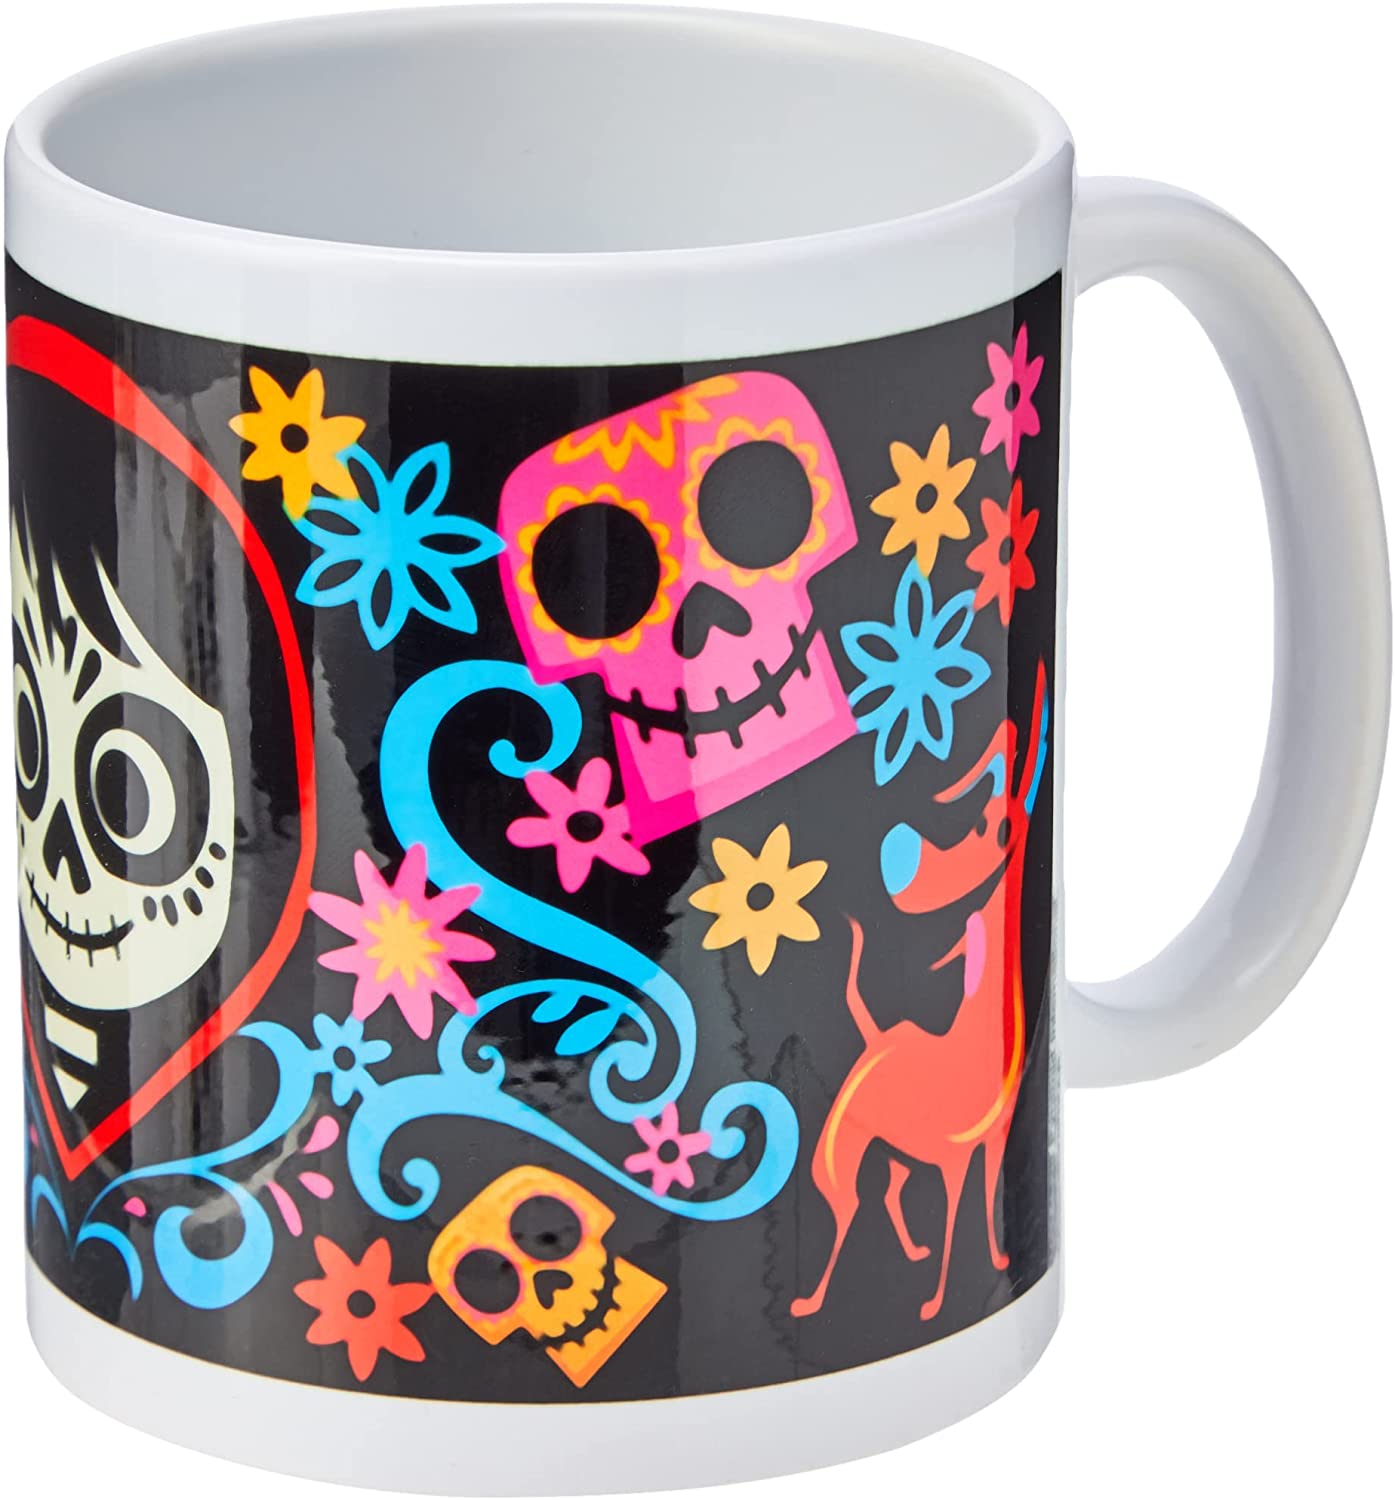 Coco Miguel and Dante Coffee Cup Set, Multi-Color, 7.9 x 11 x 9,3 cm